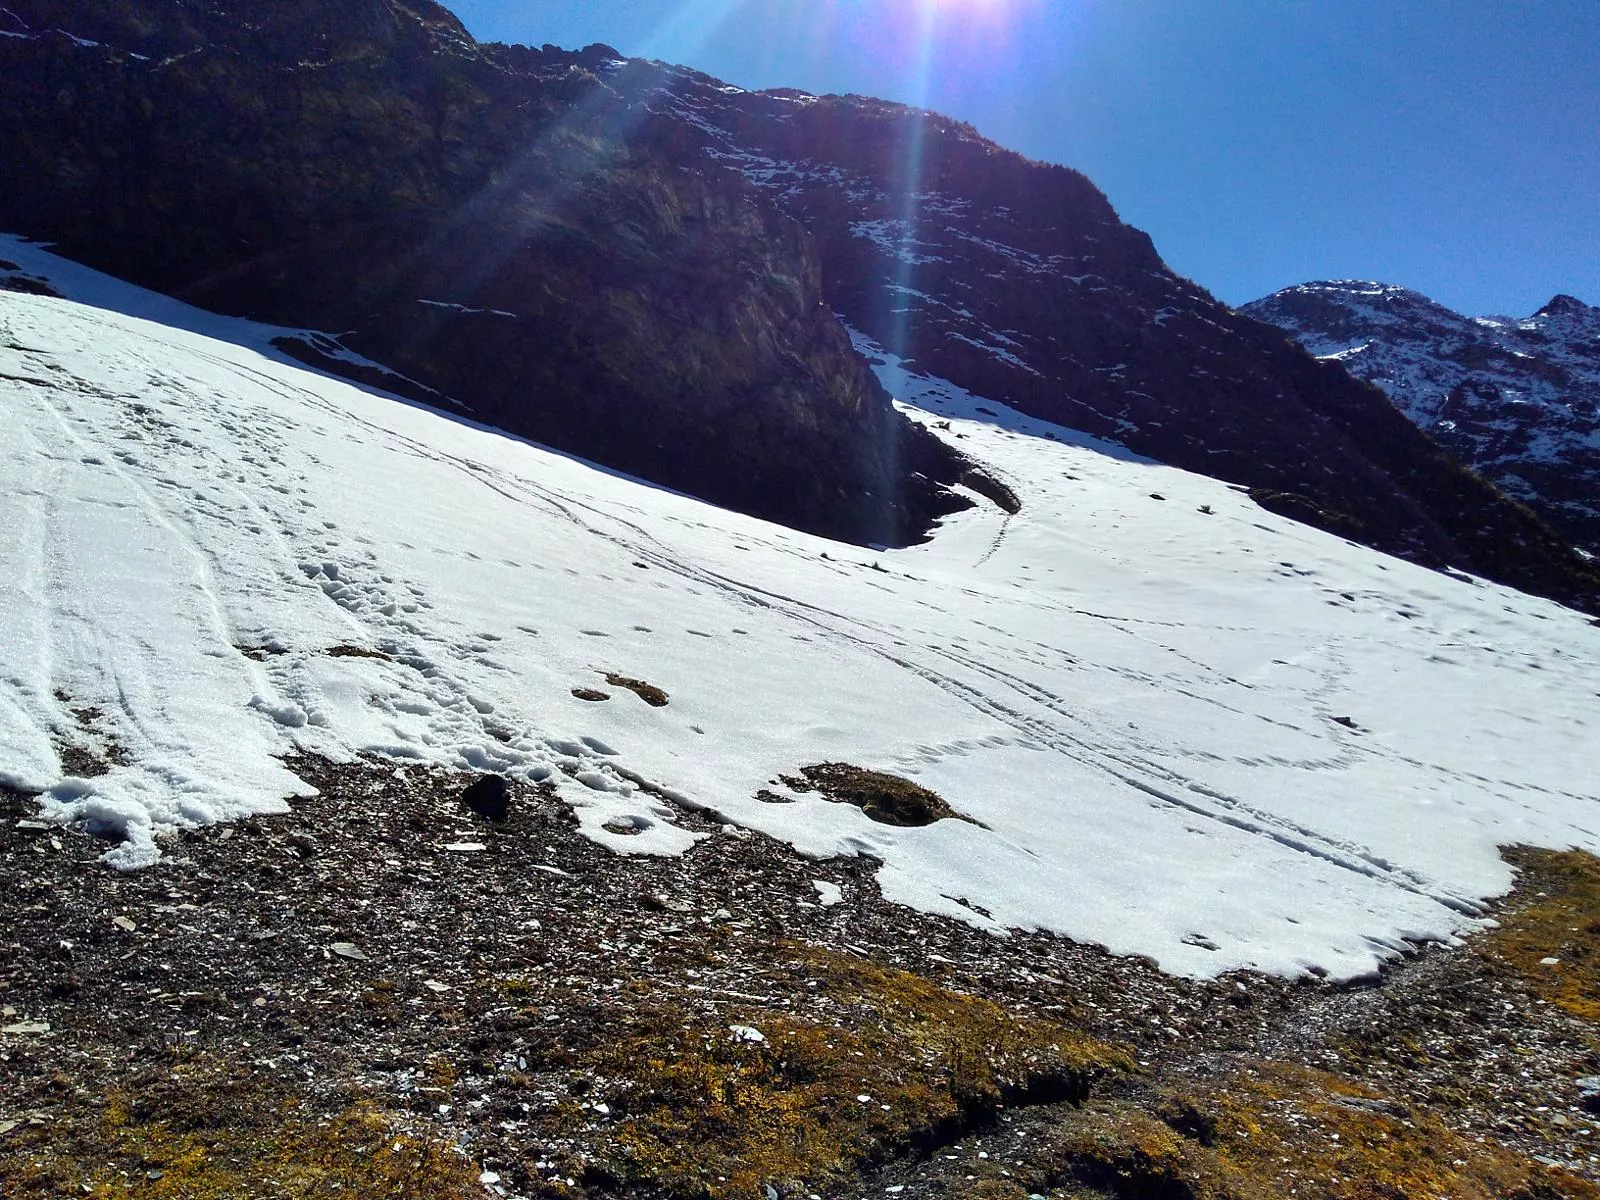 Abra de Lares in Peru, South America | Snowboarding,Skiing,Mountain Biking - Rated 0.9